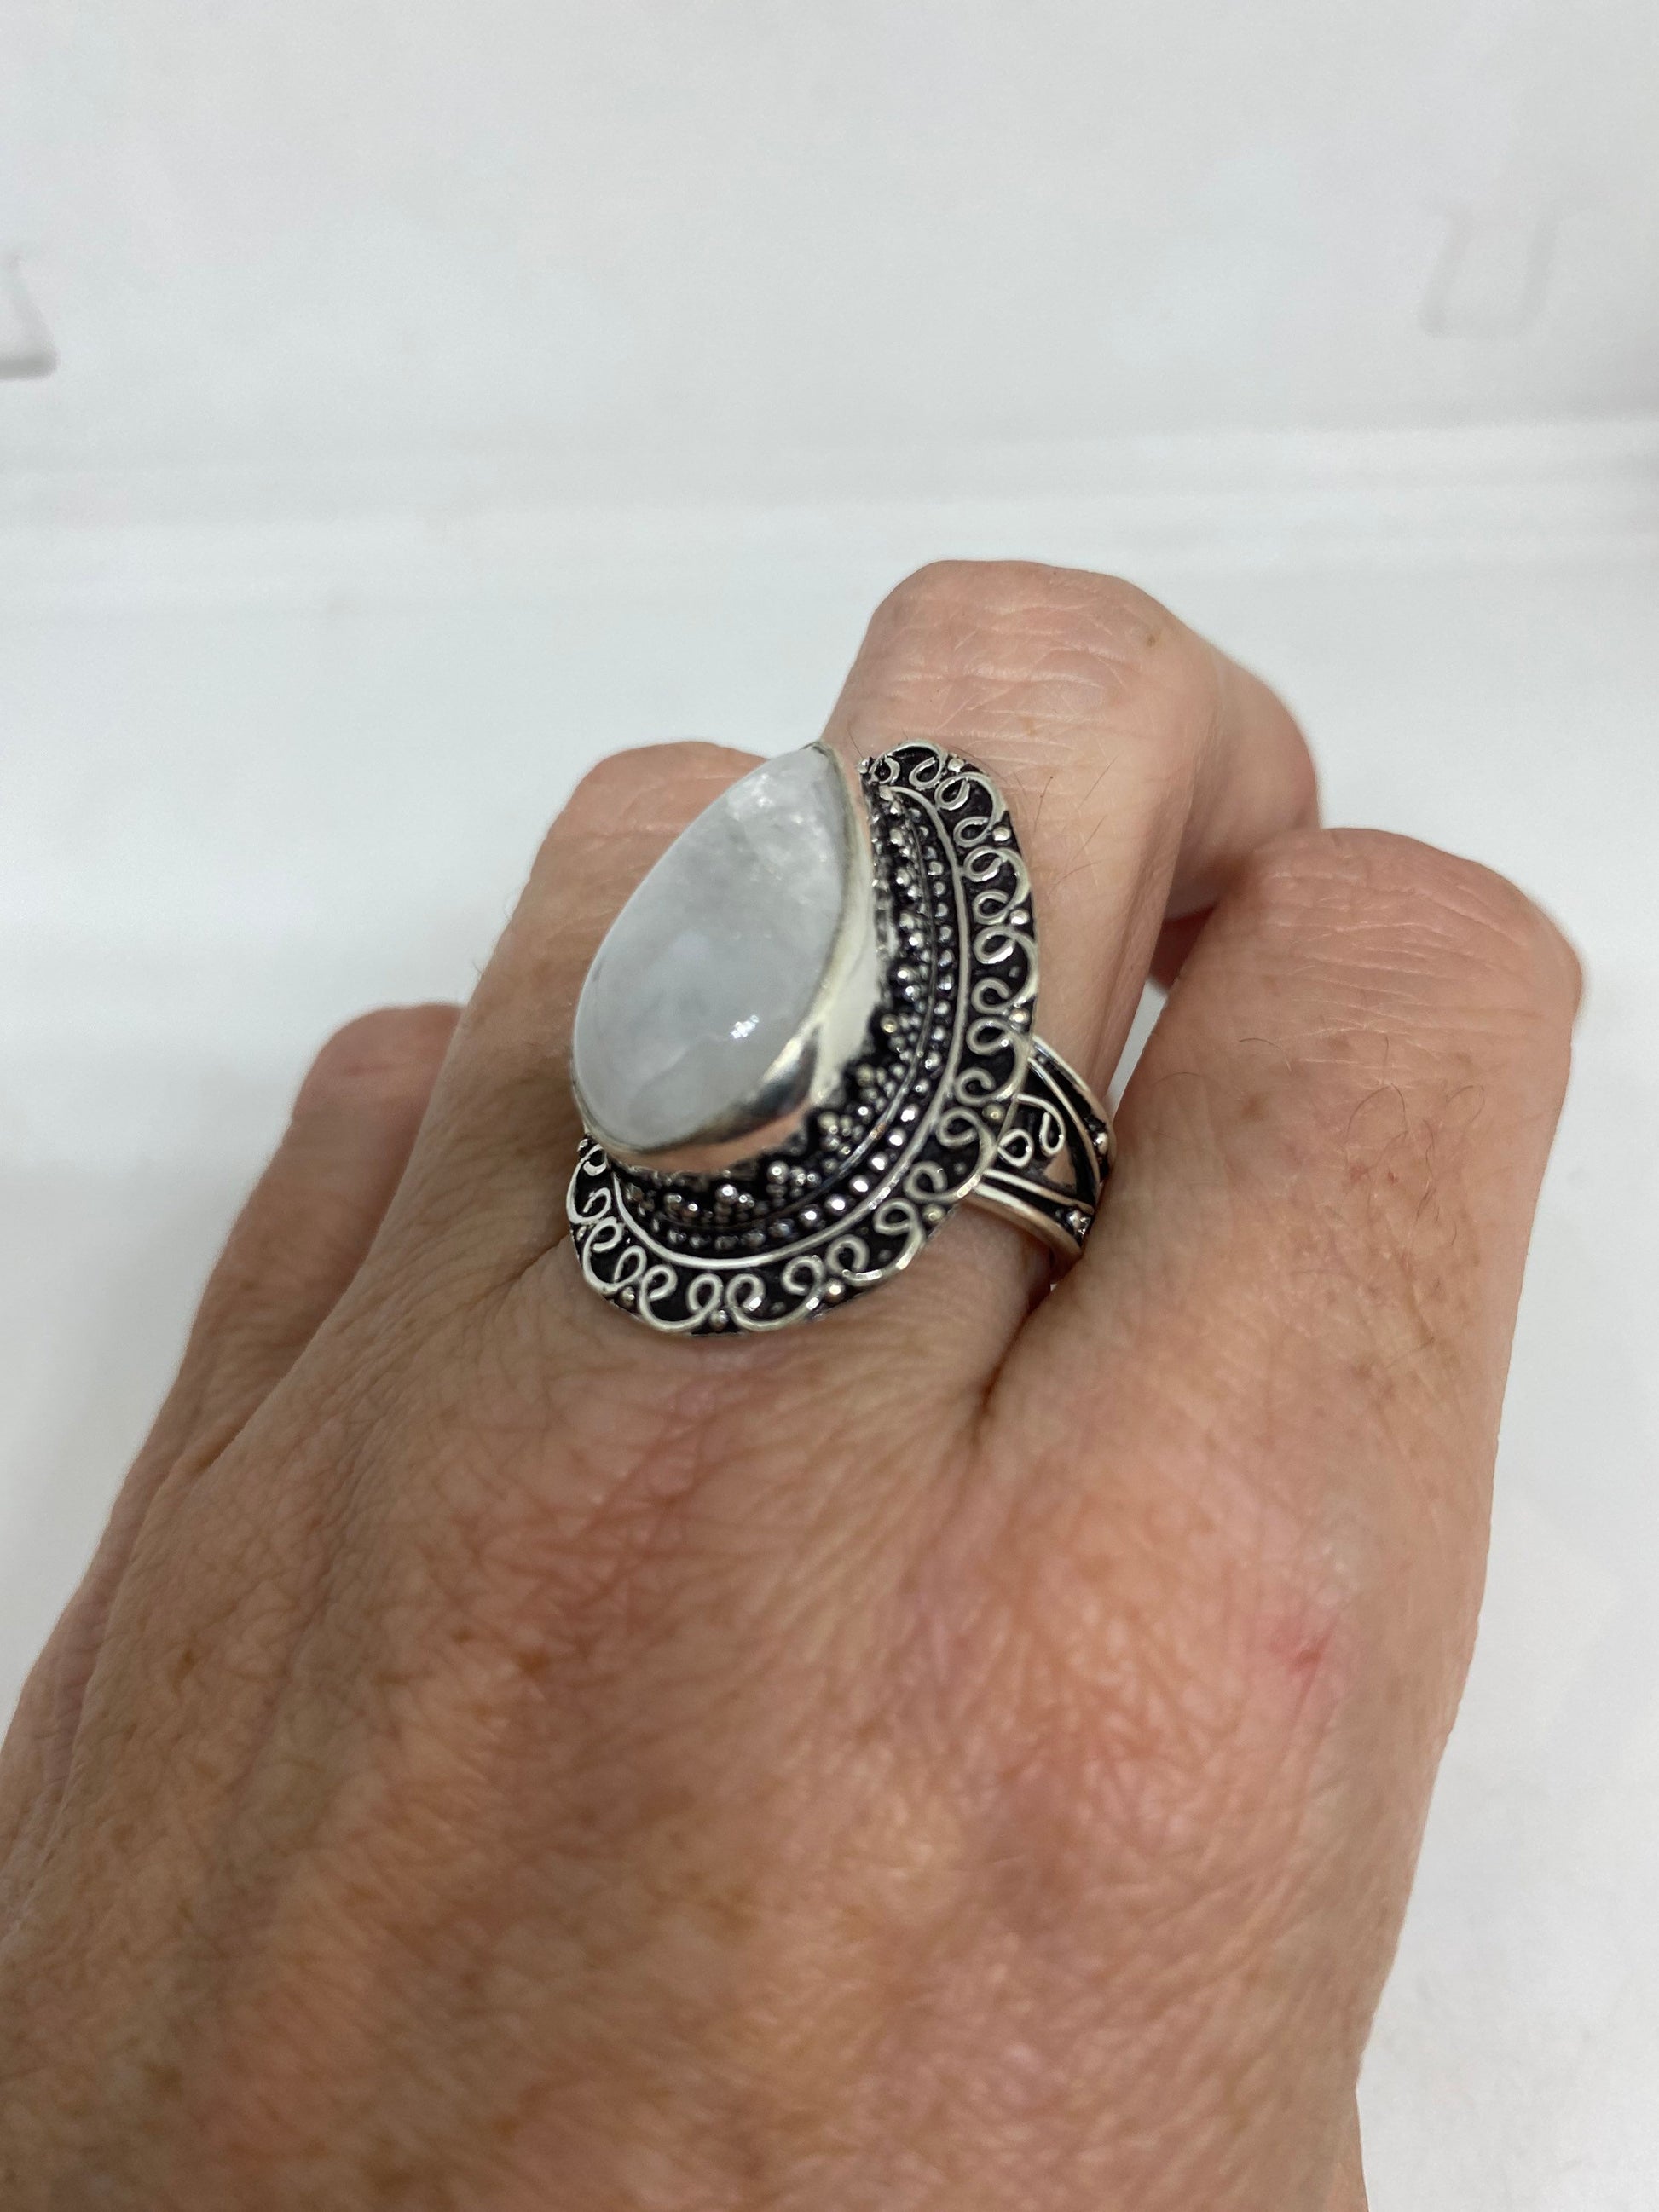 Vintage Large Blue White Rainbow Moonstone Stone Silver Ring